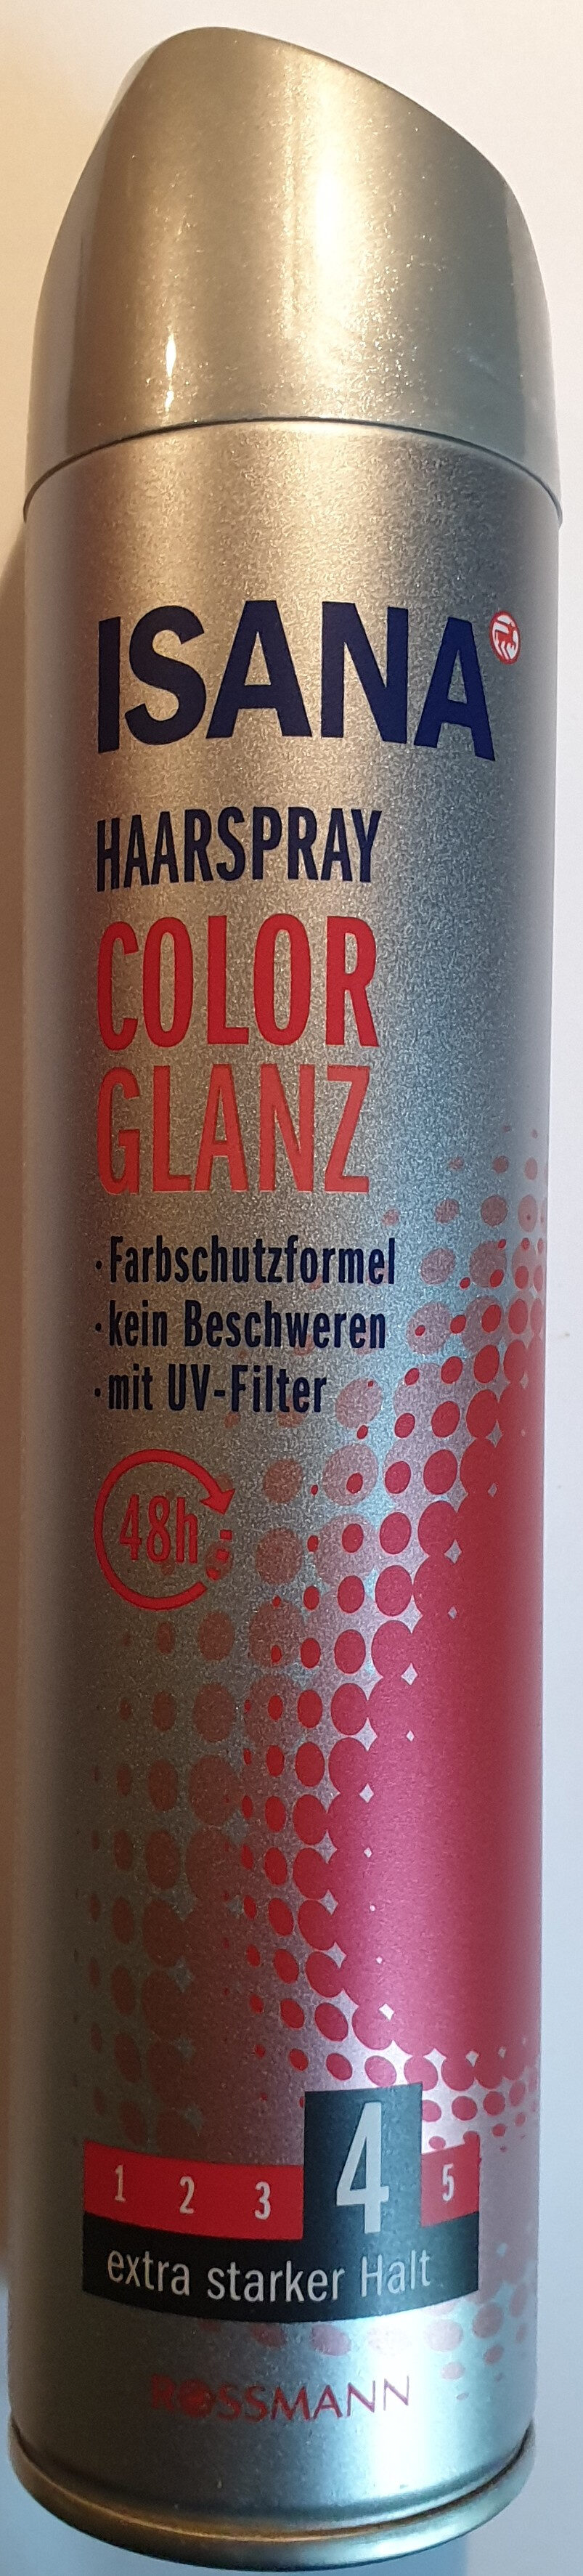 Haarspray Color Glanz, 4 extra starker Halt - Produit - de